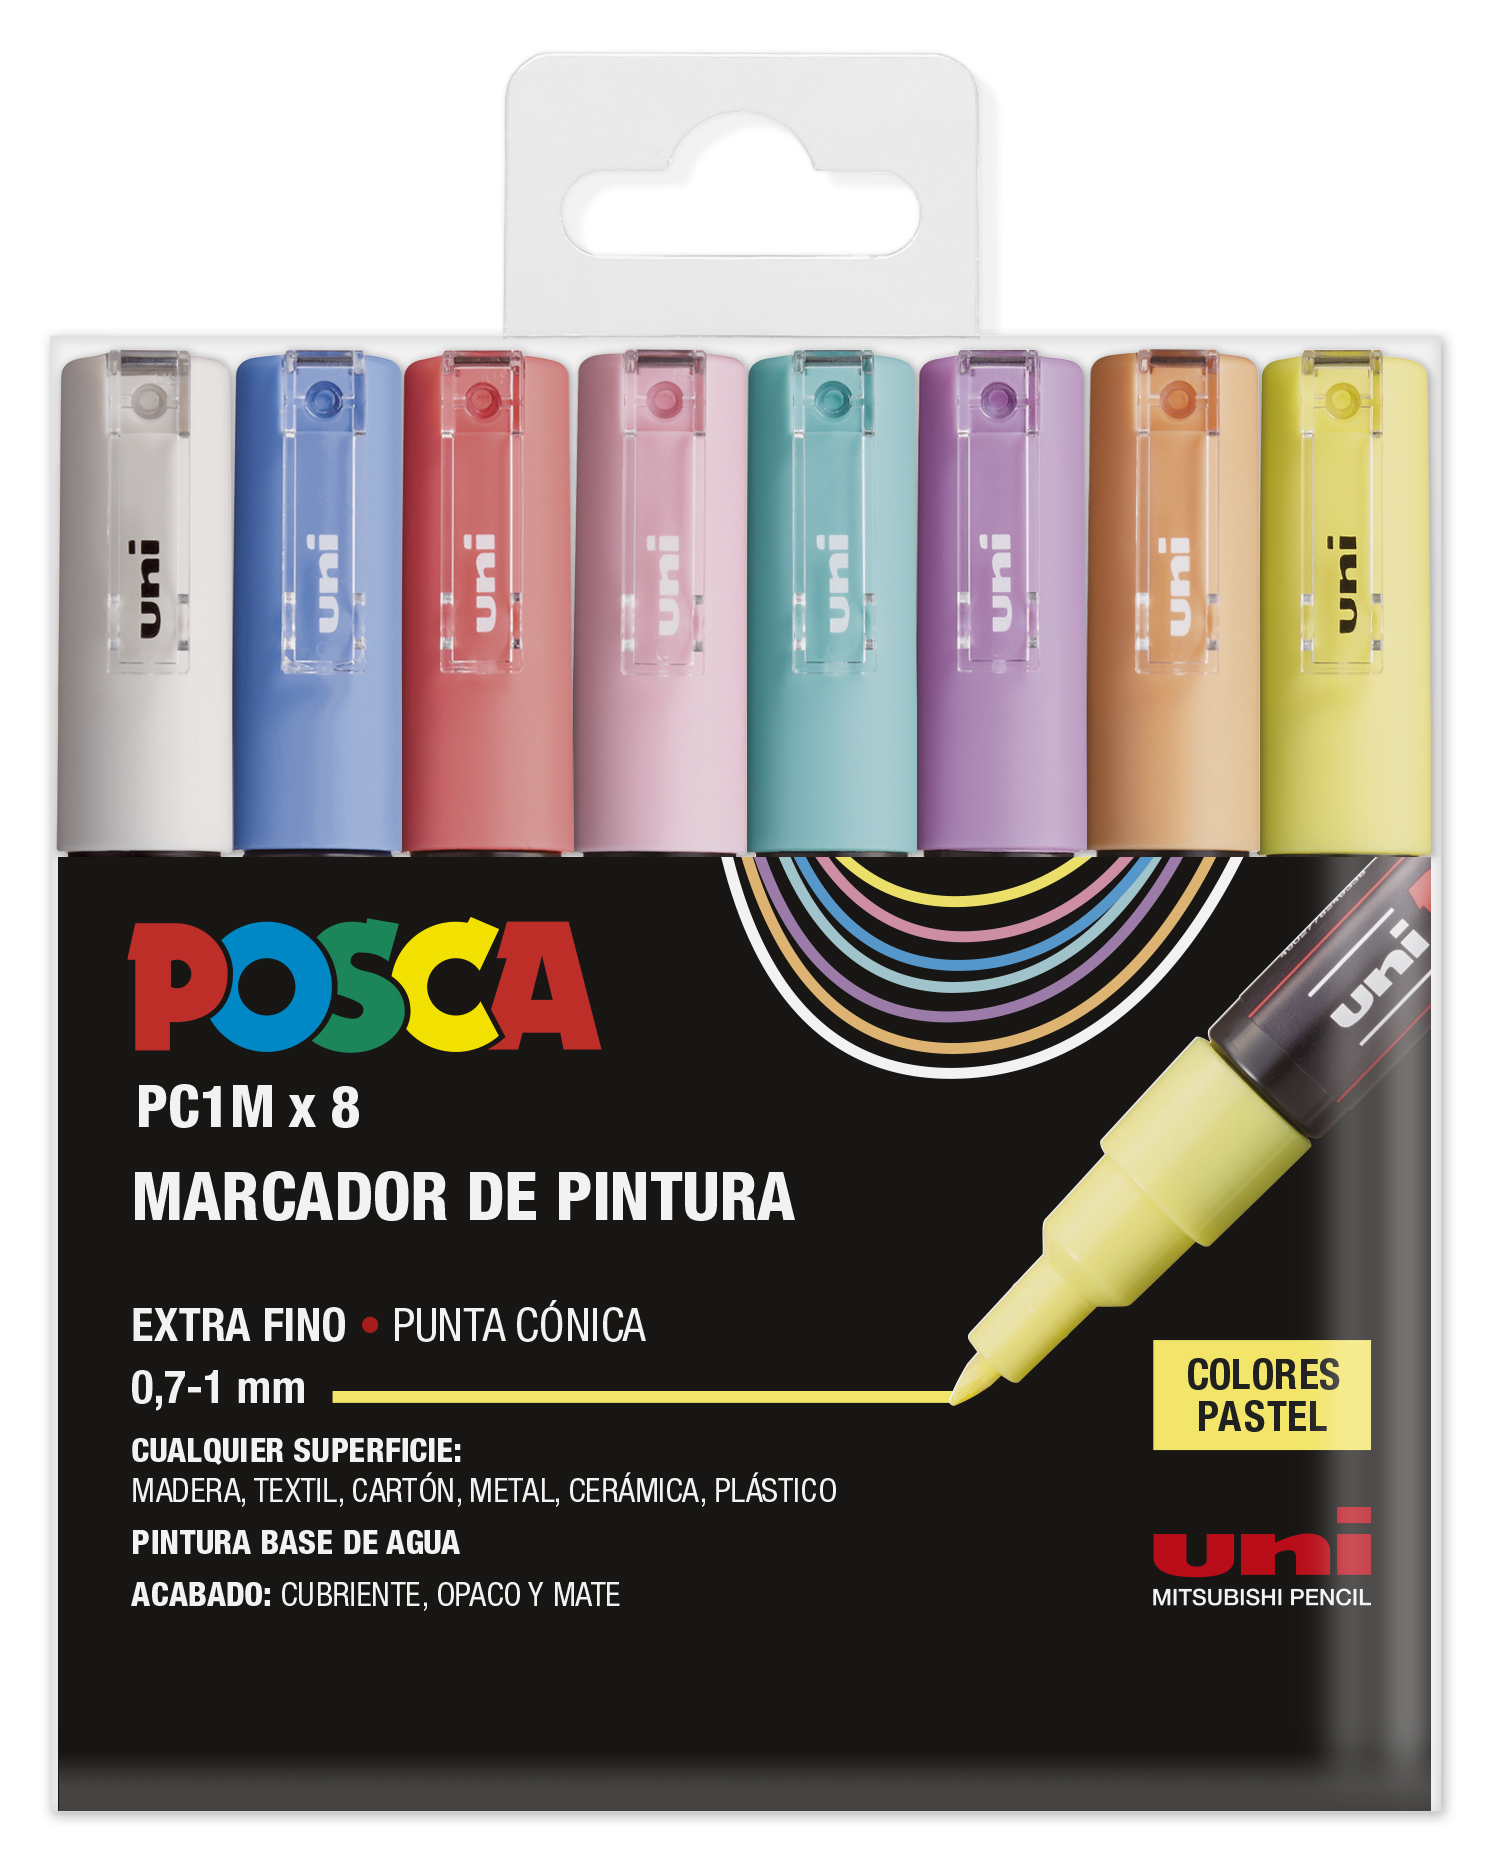 Opitec Espana  Rotuladores POSCA MARKER PC 3M pastel, 8 ud.